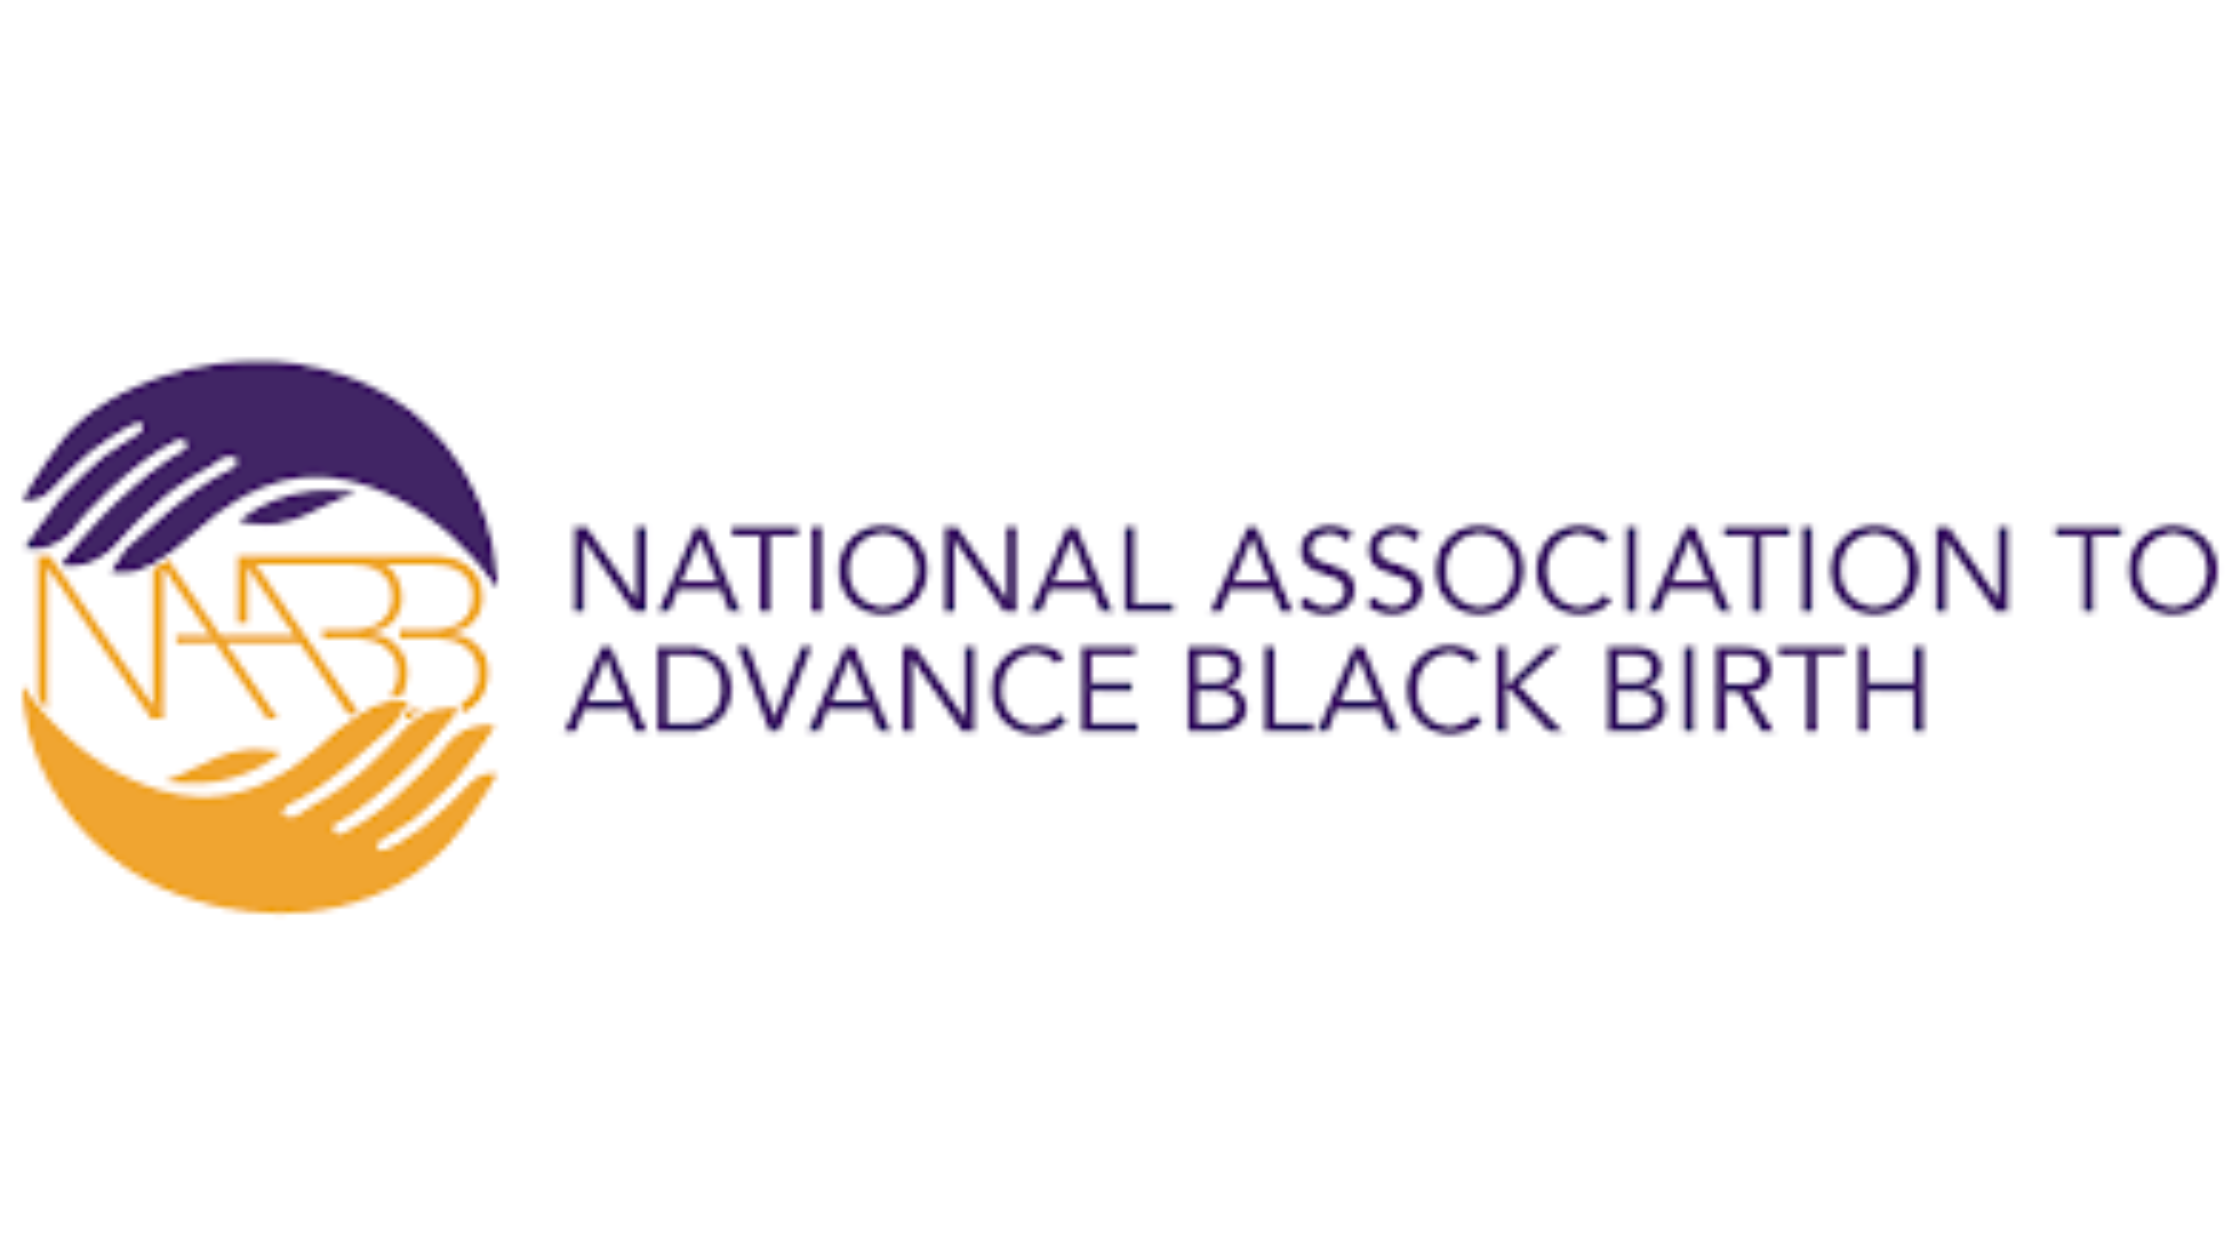 The National Association to Advance Black Birth